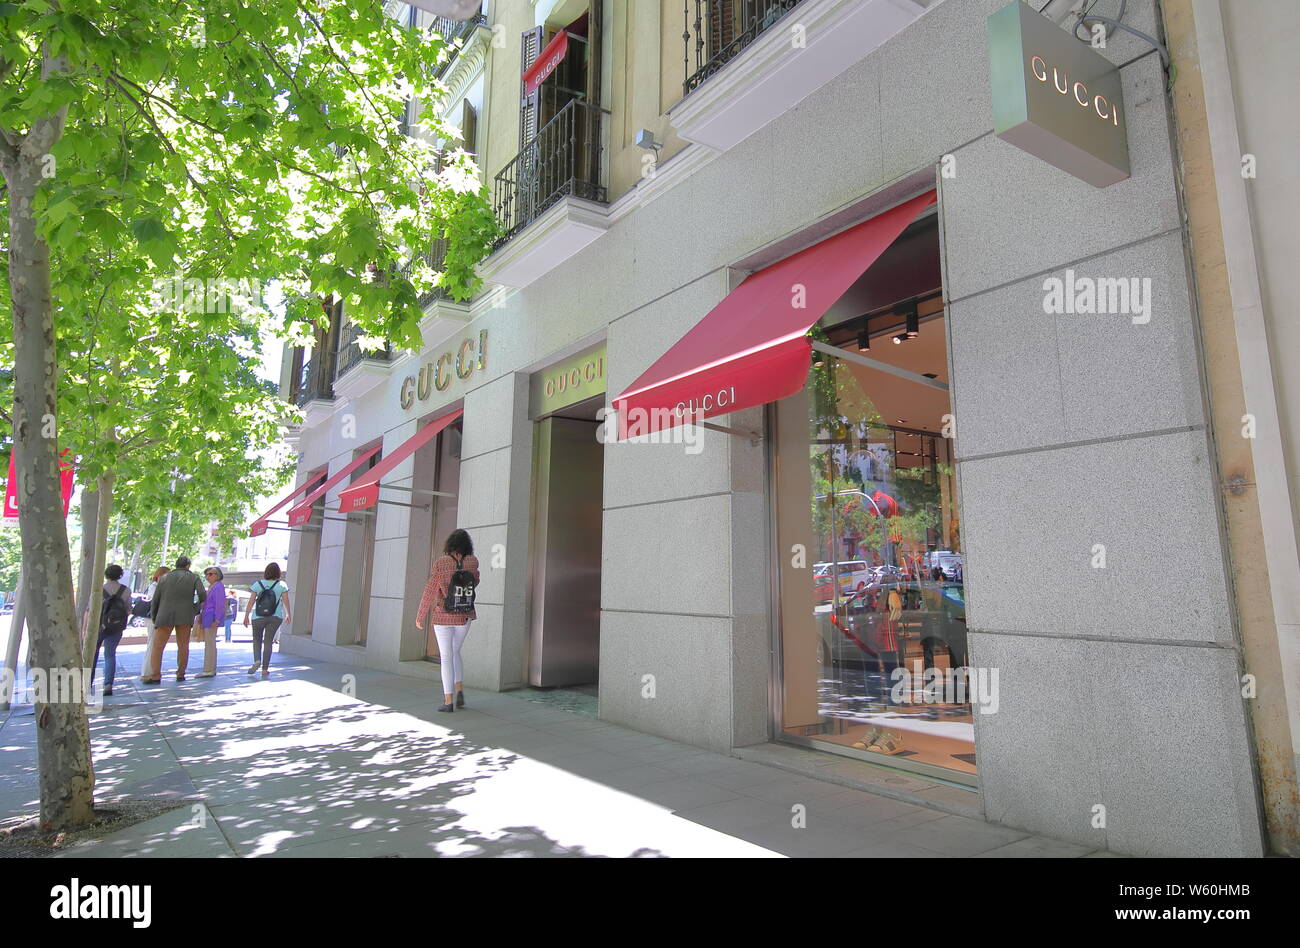 udarbejde biograf kapitalisme People visit Gucci store Serrano shopping street in Madrid Spain Stock  Photo - Alamy